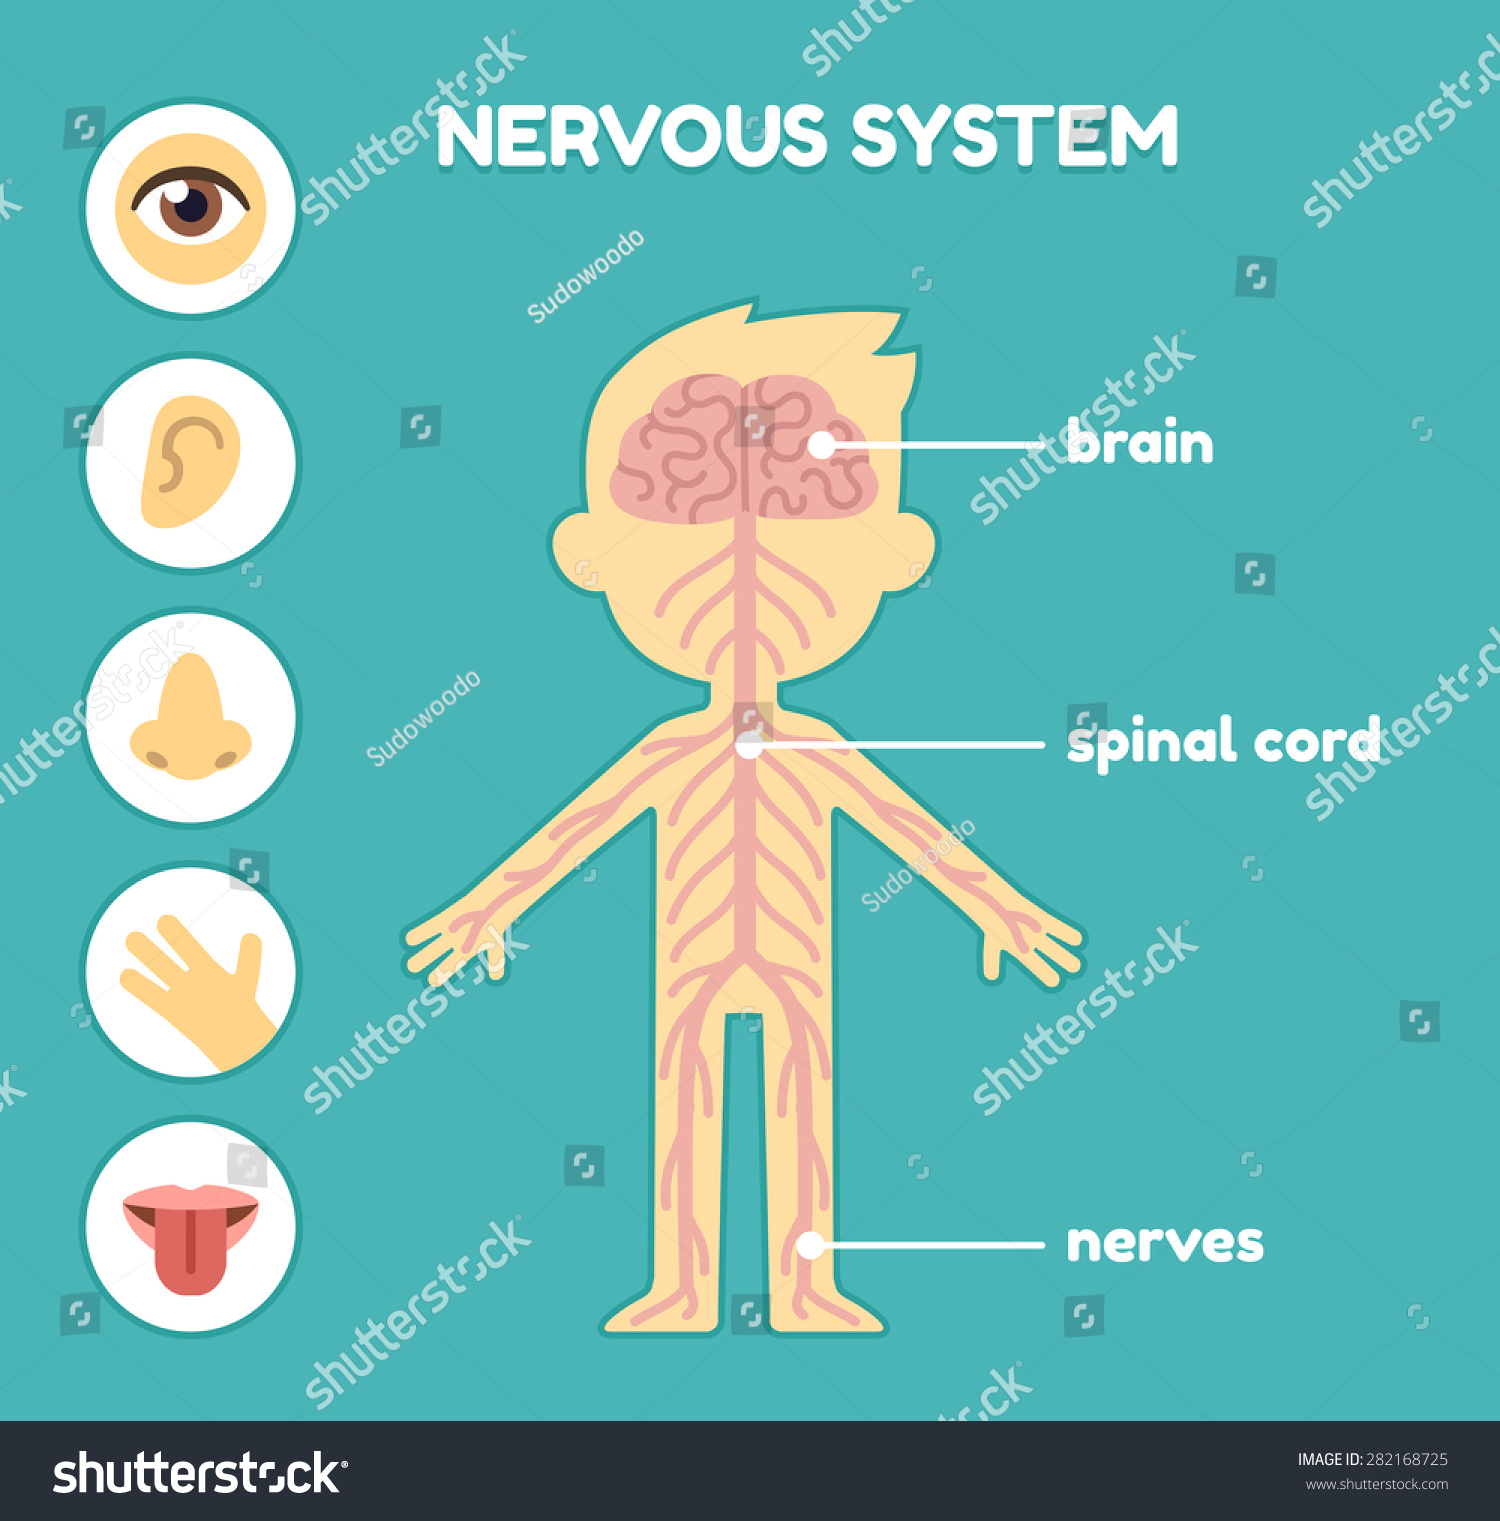 Nervous System Educational Anatomy Chart Kids Stock Vector 282168725 - Shutterstock